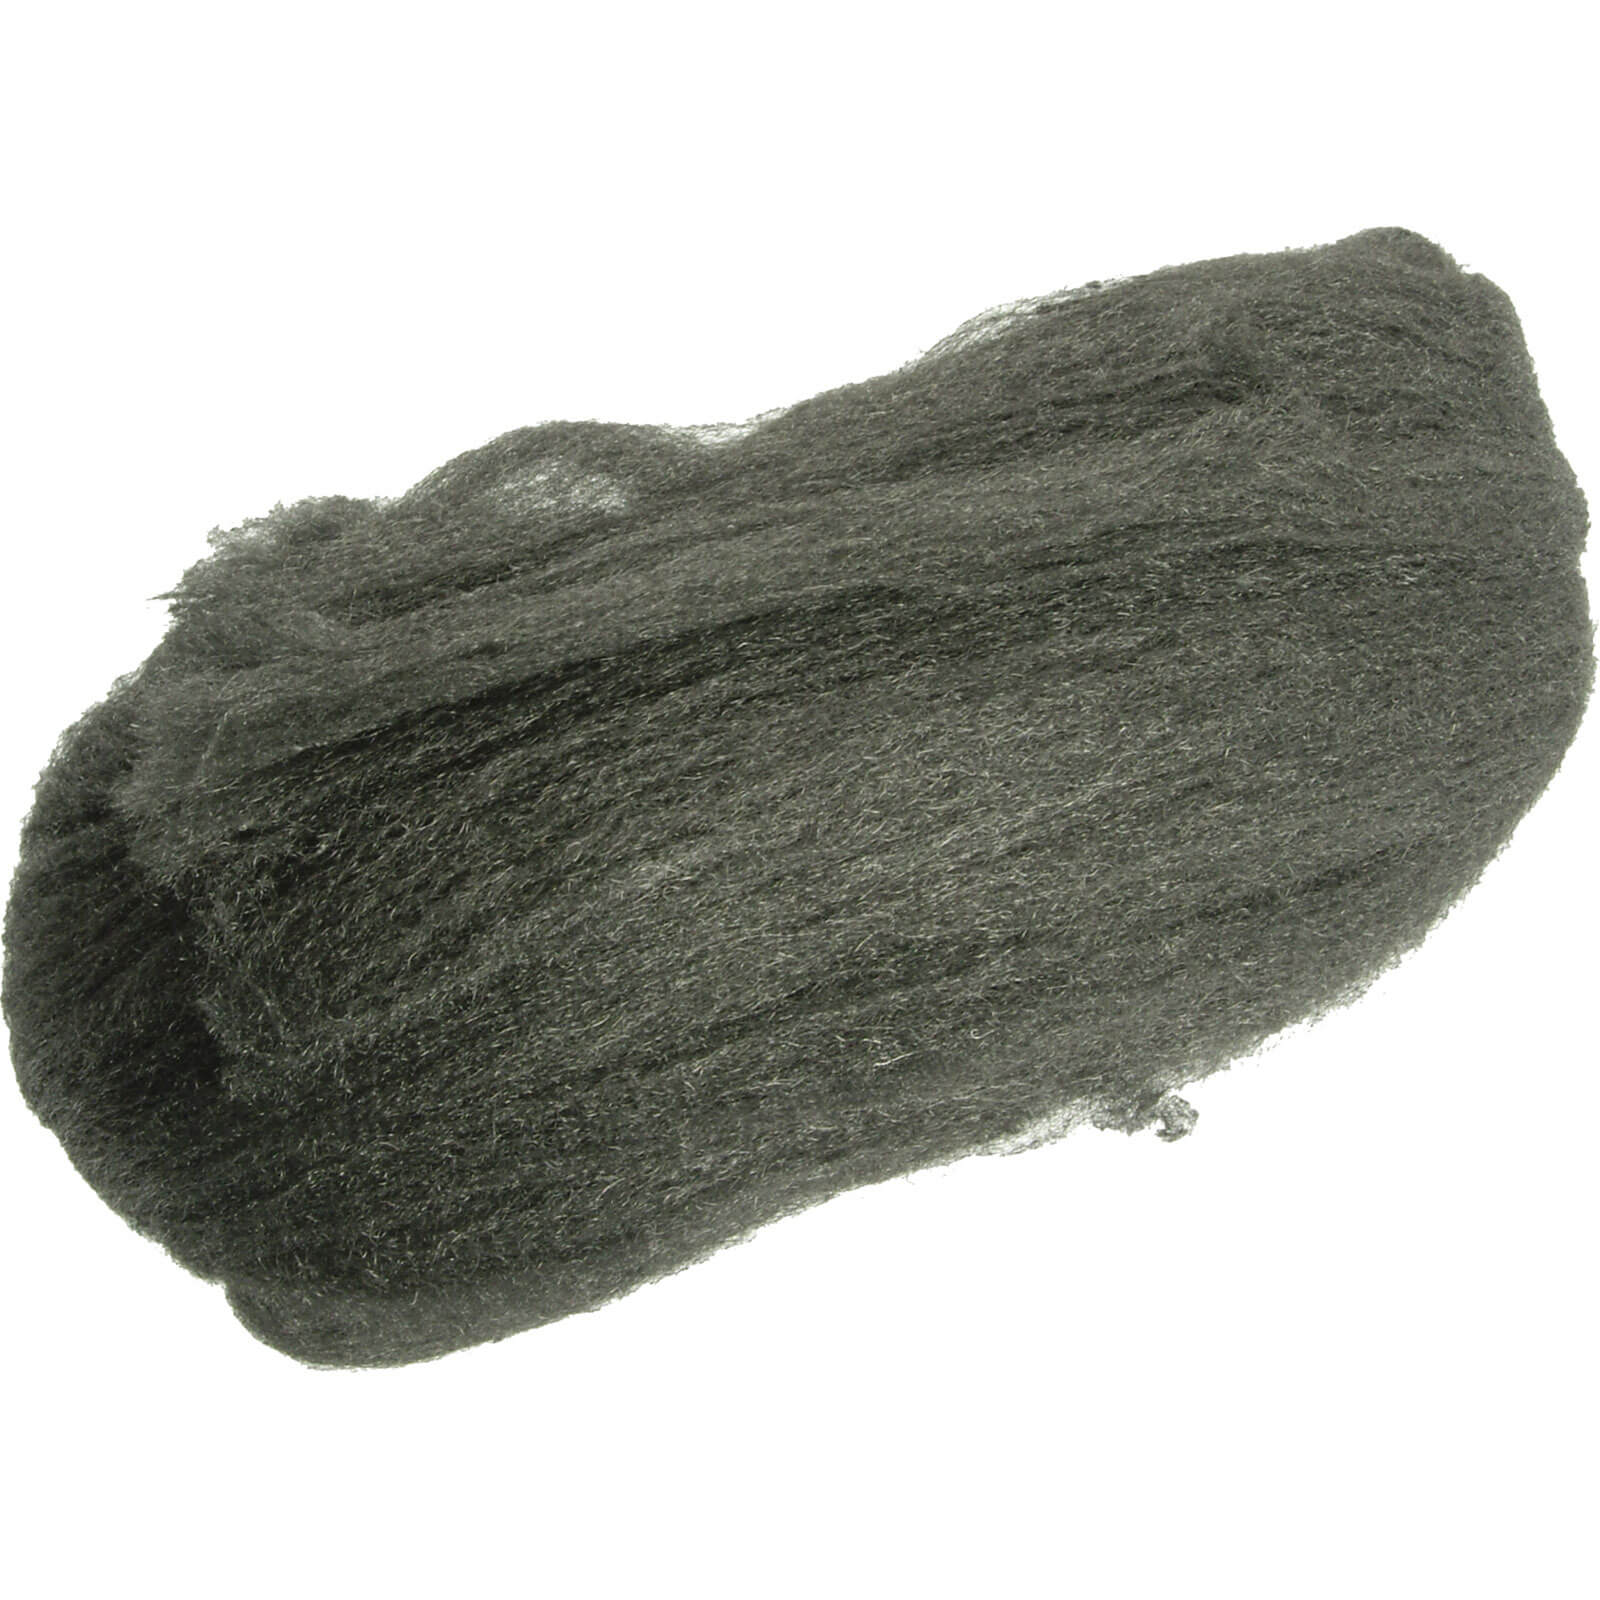 Image of Faithfull Steel Wire Wool 4 Very Coarse 450g